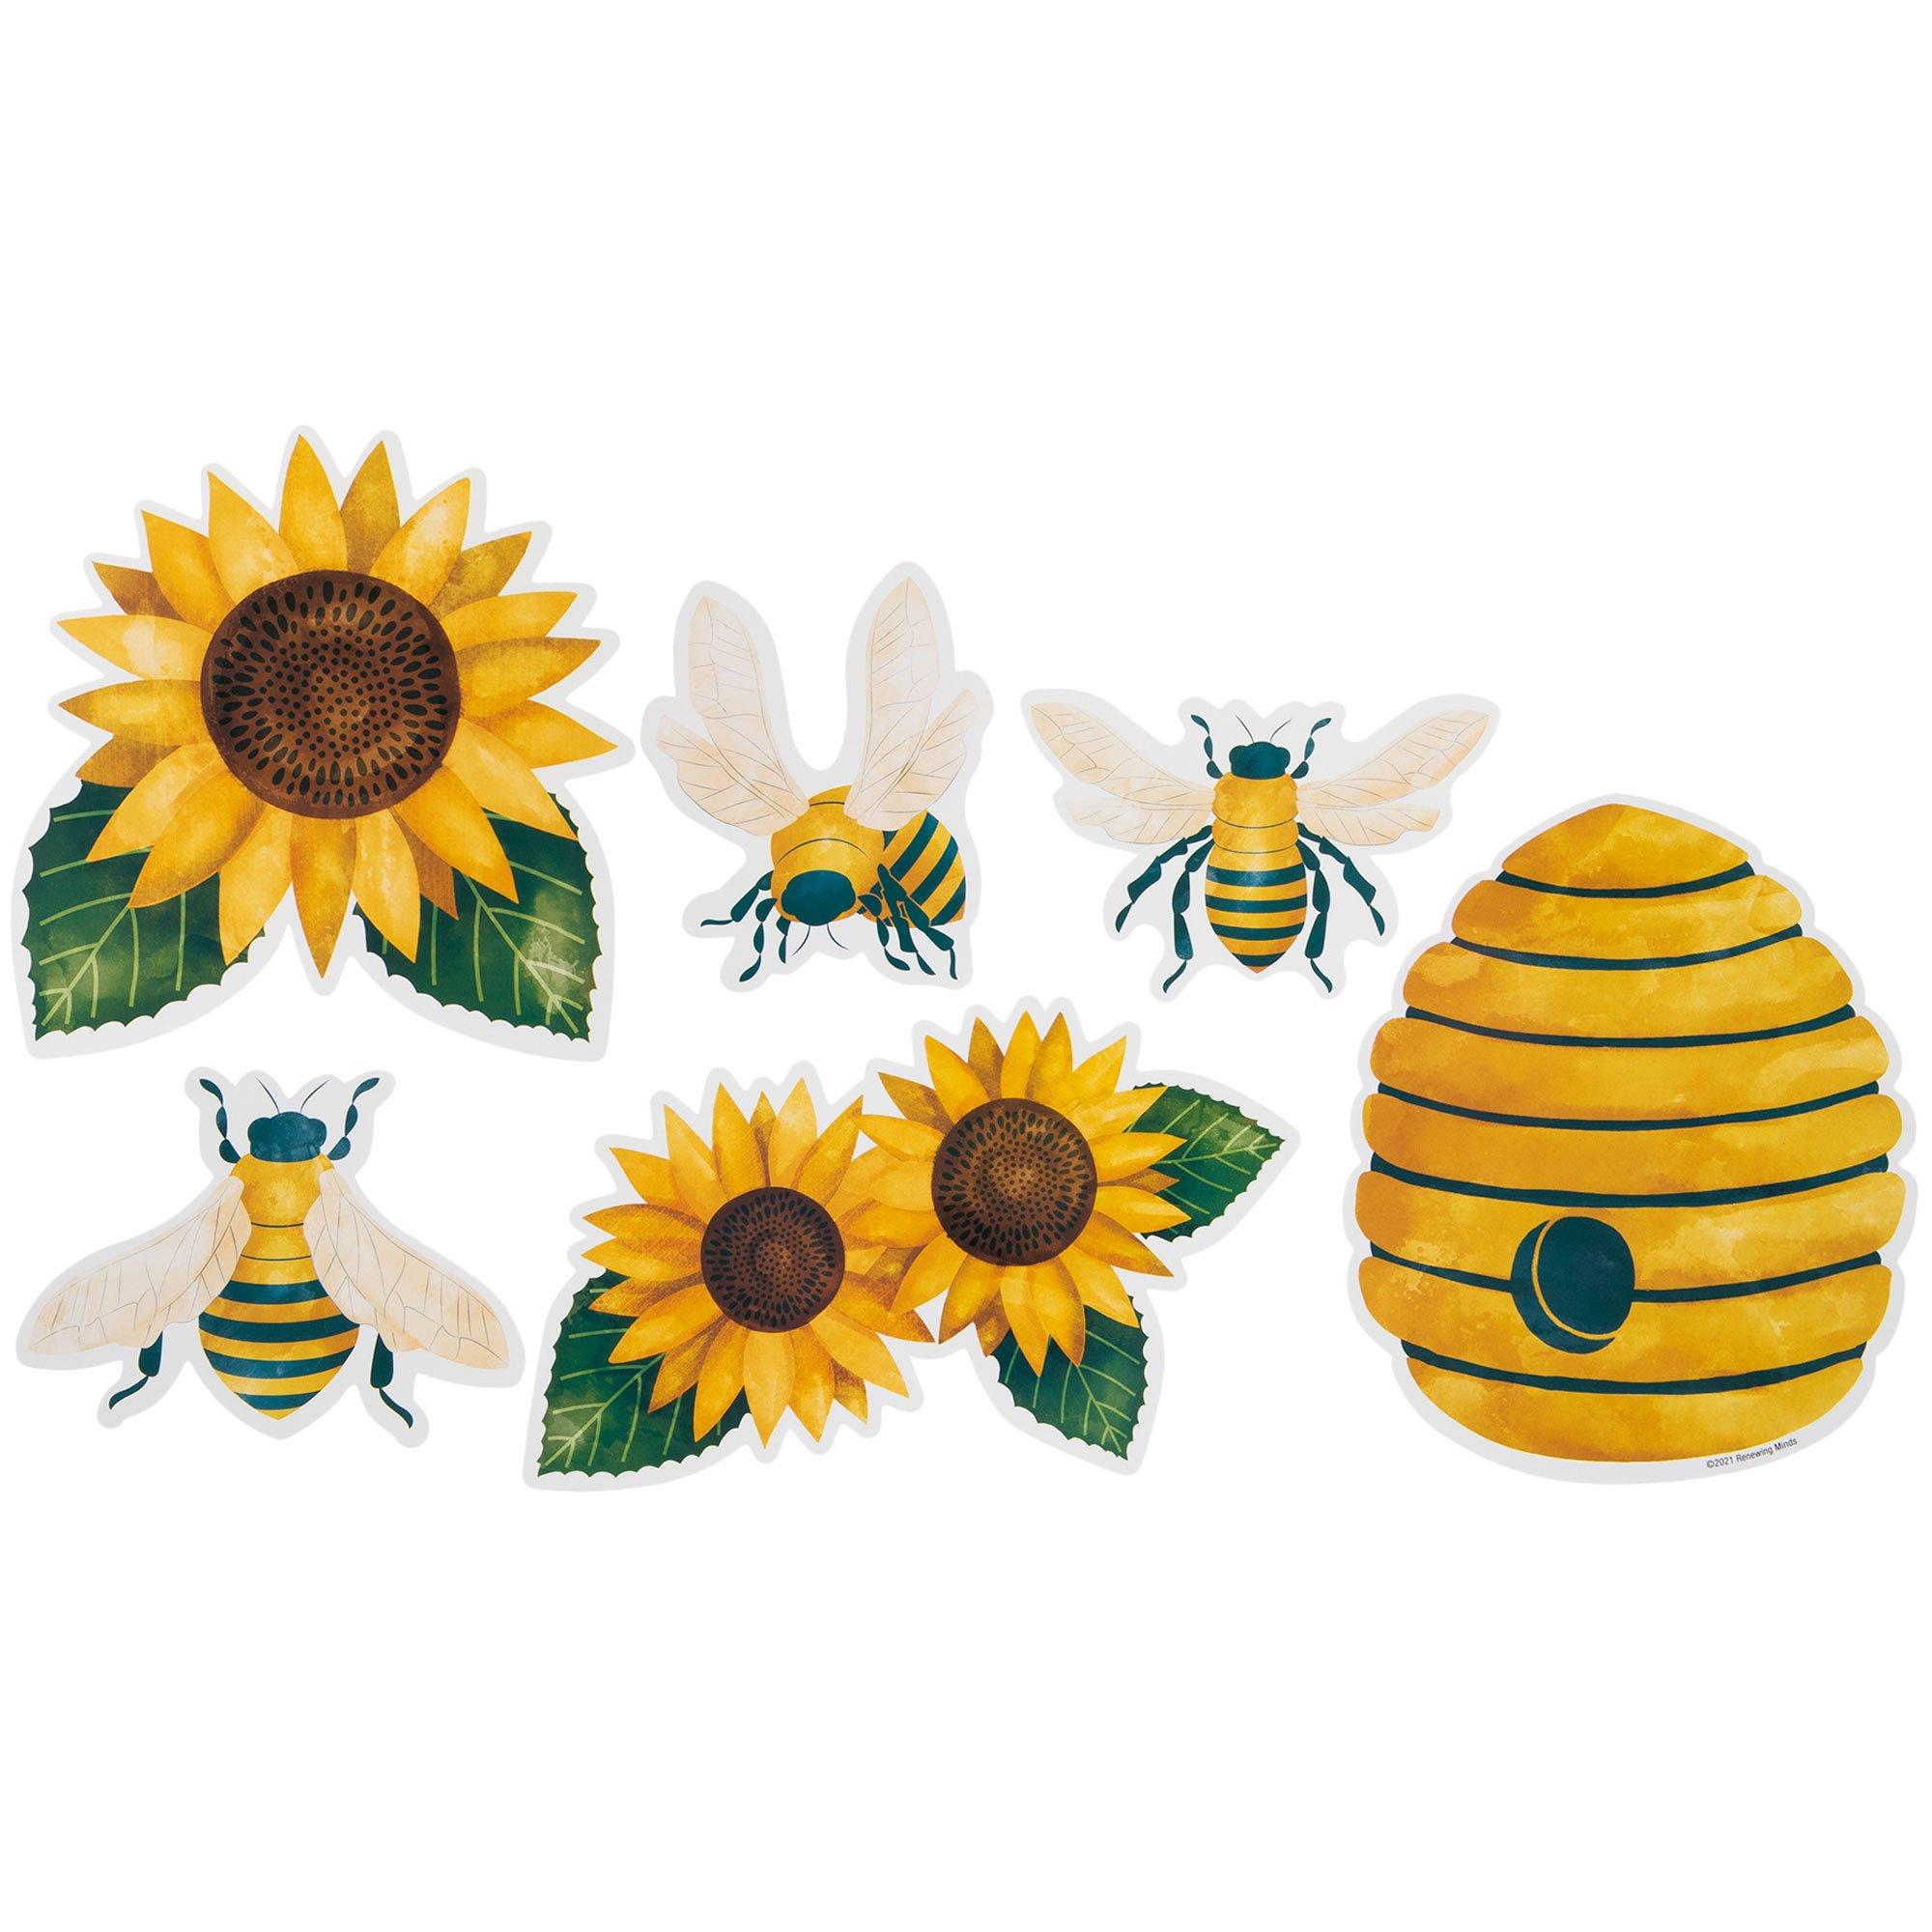 Hobby Lobby Spring Decor Bees and Sunflower Decor #HOBBYLOBBY 